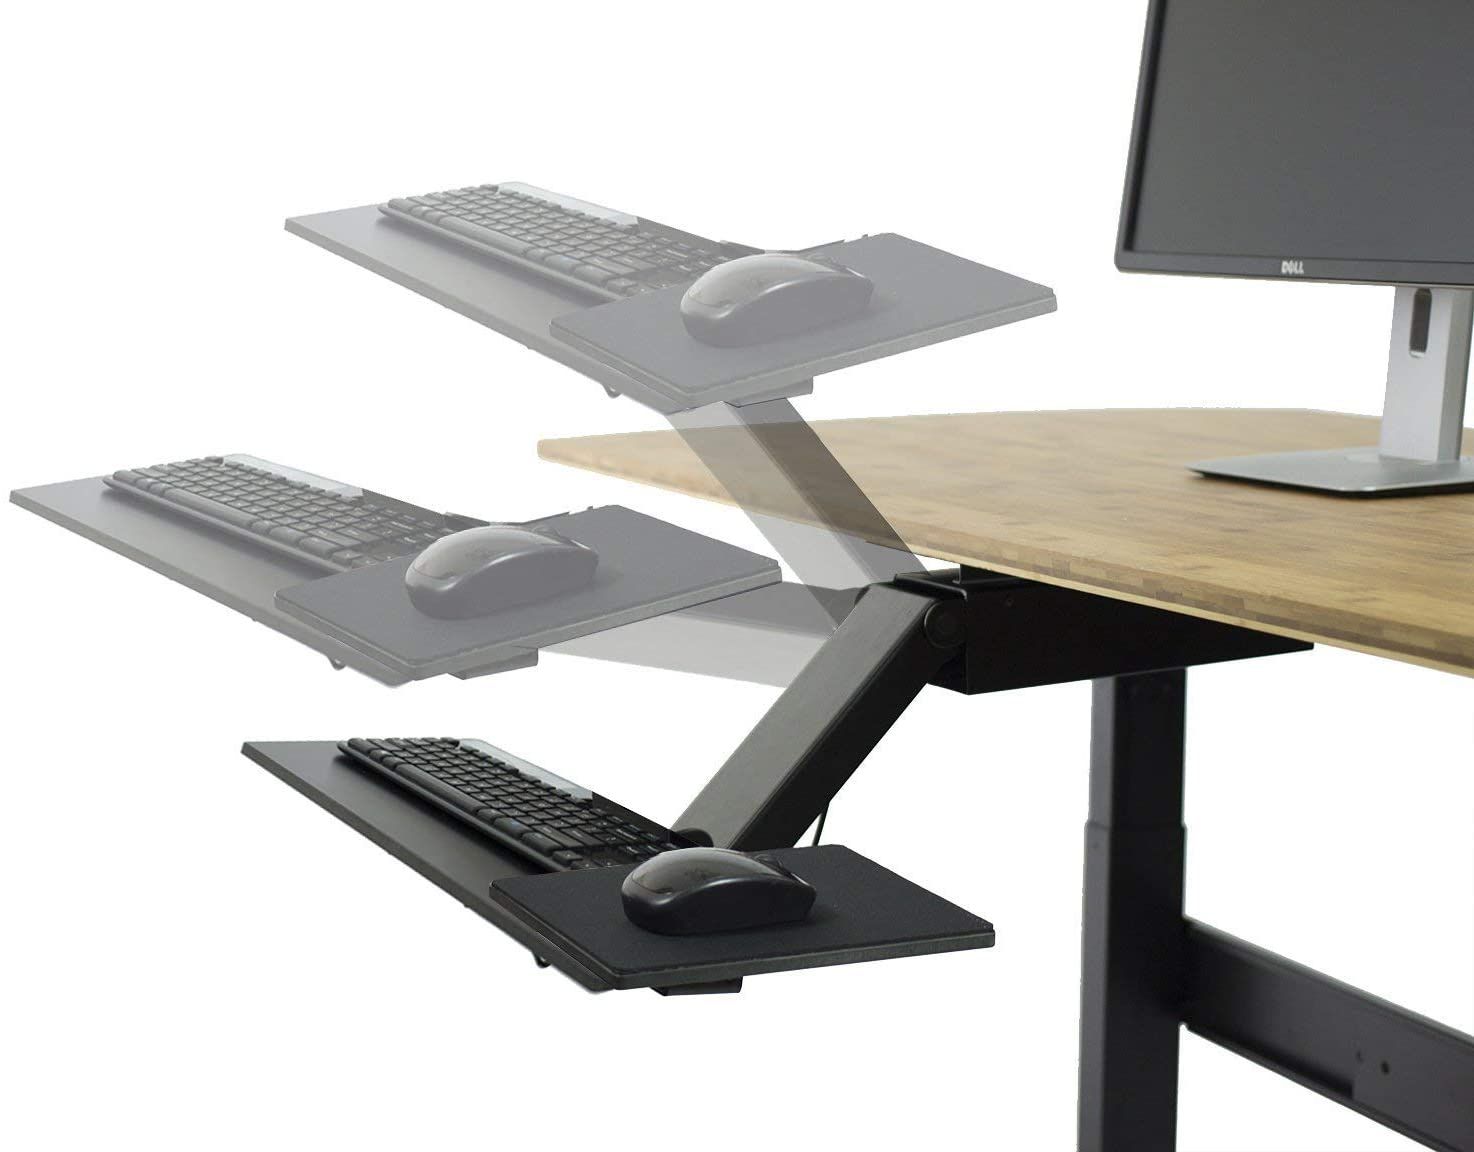 KT2 Ergonomic Sit Stand Keyboard Tray height adjustments